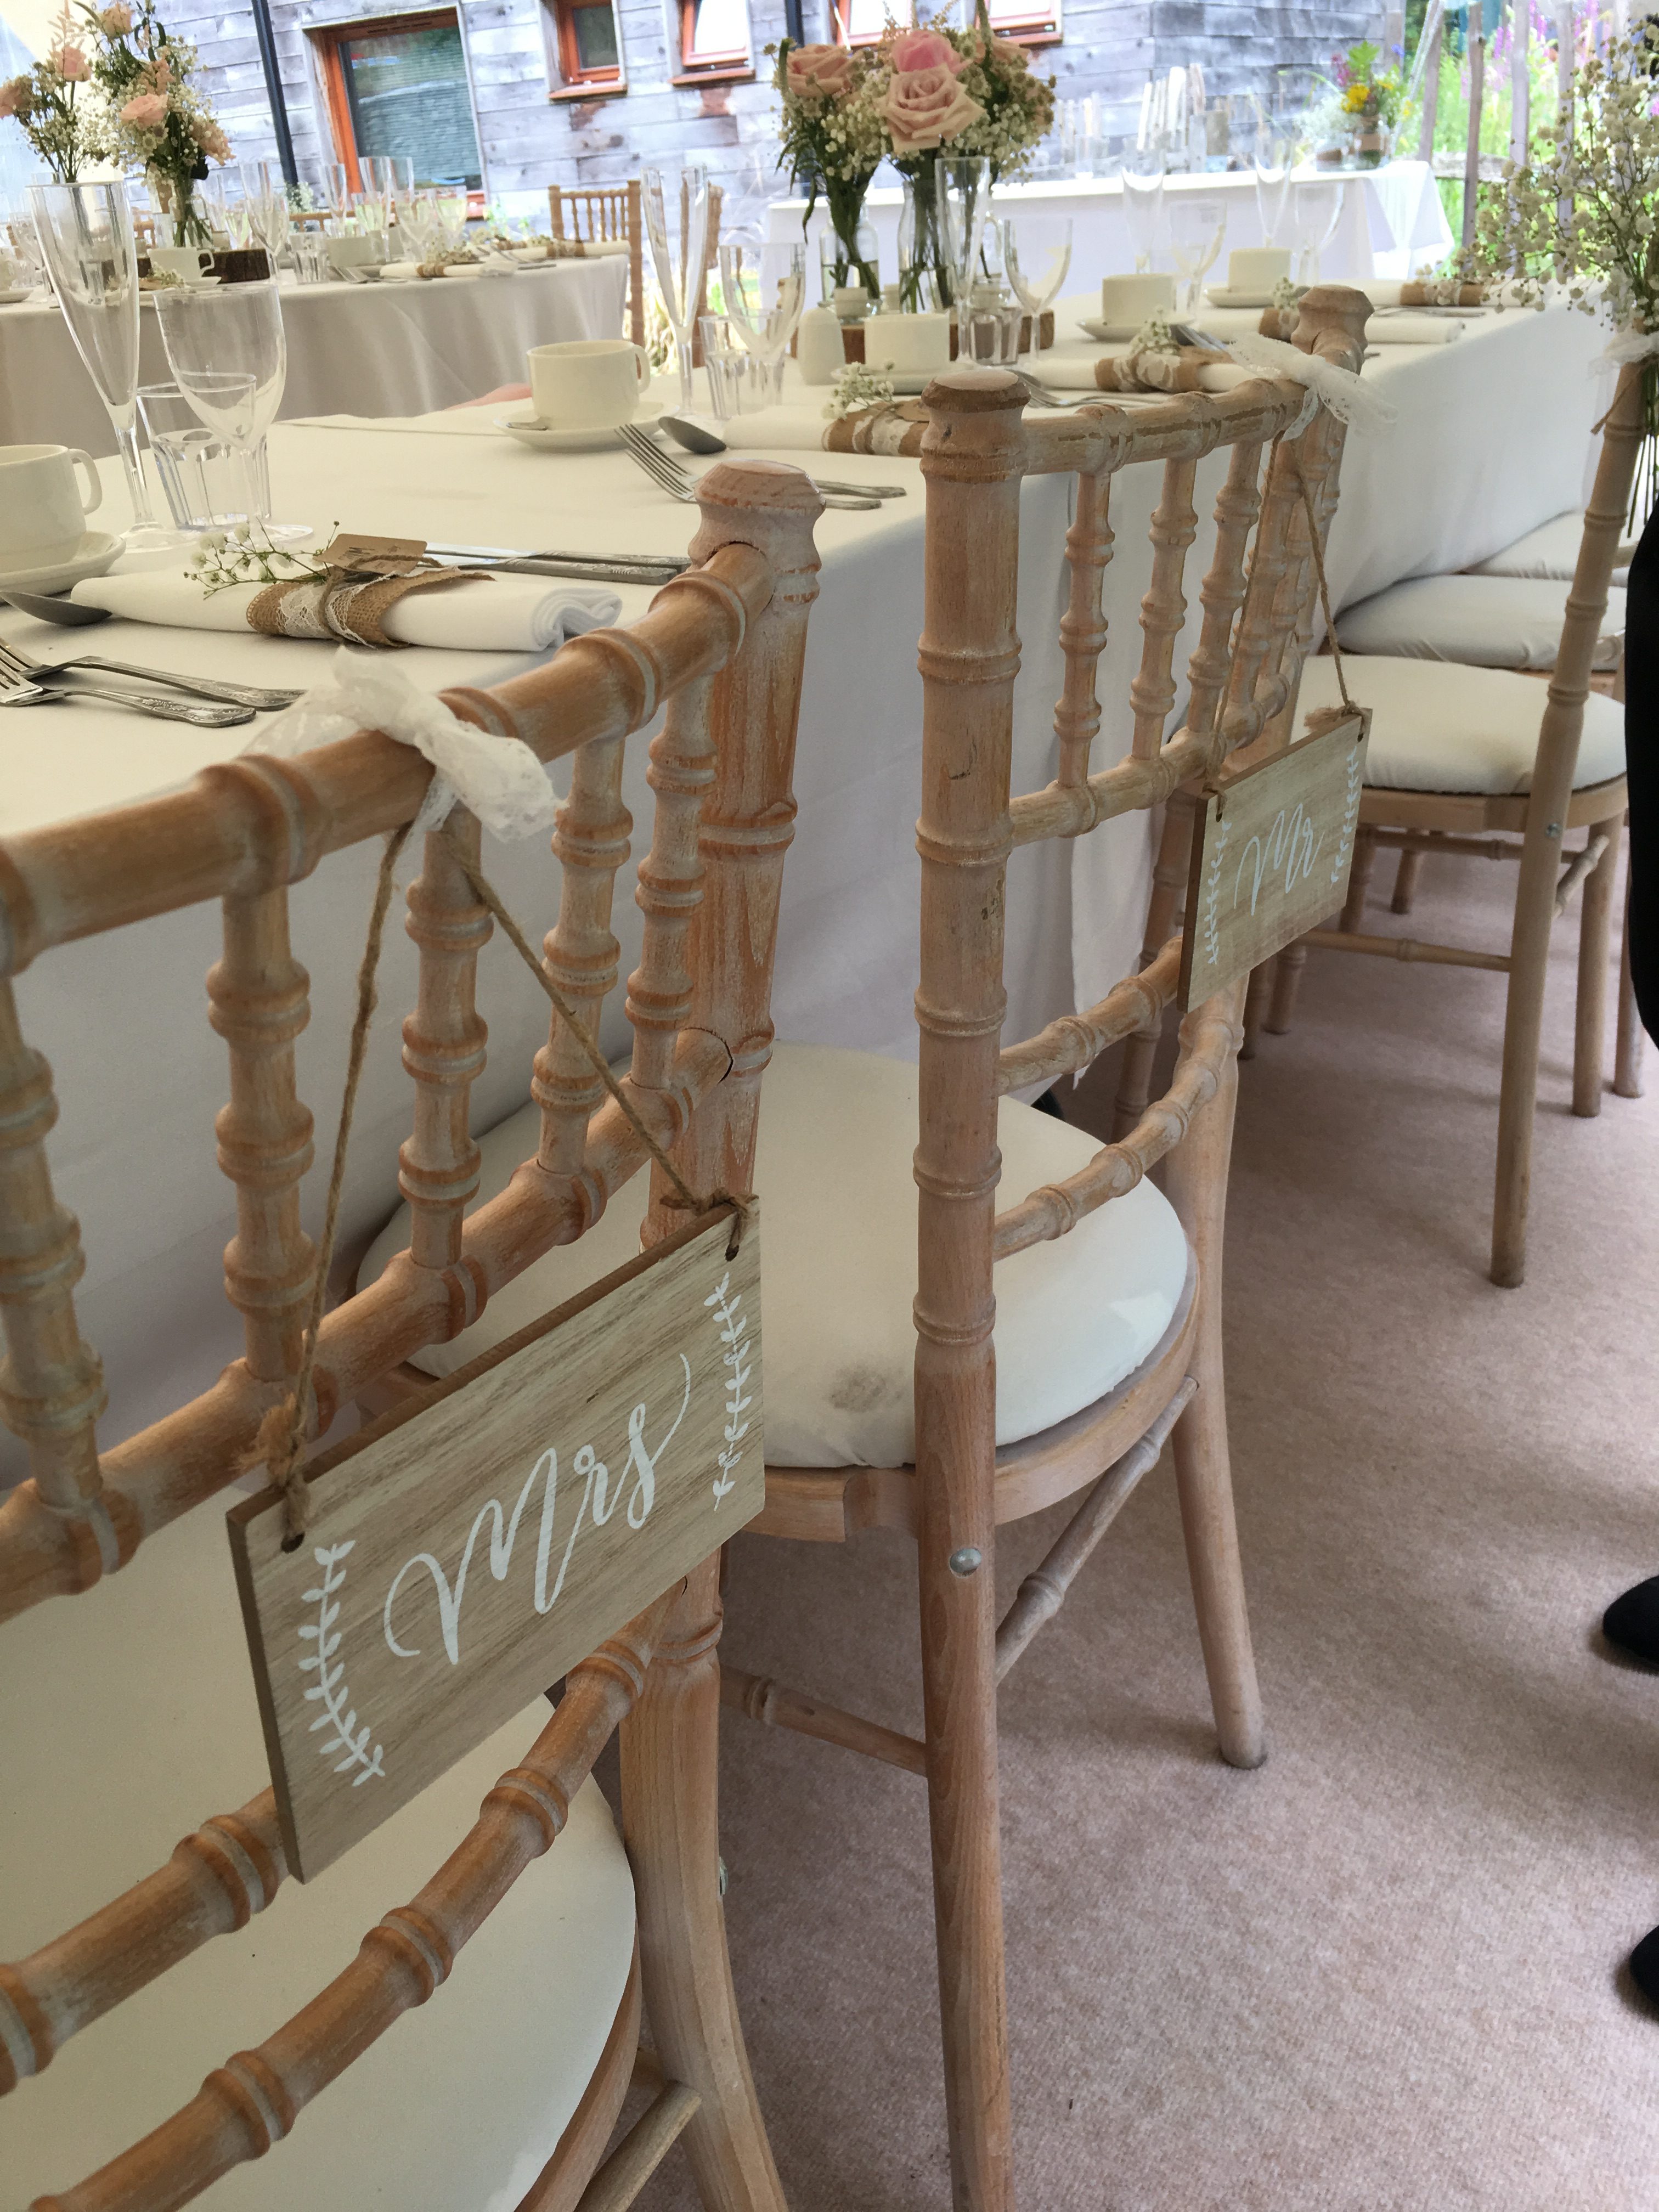 Cream Limewash Chiavari Chairs - Mr & Mrs Chair Signs Close up Sophia's Final Touch - Venue Styling - Weddings